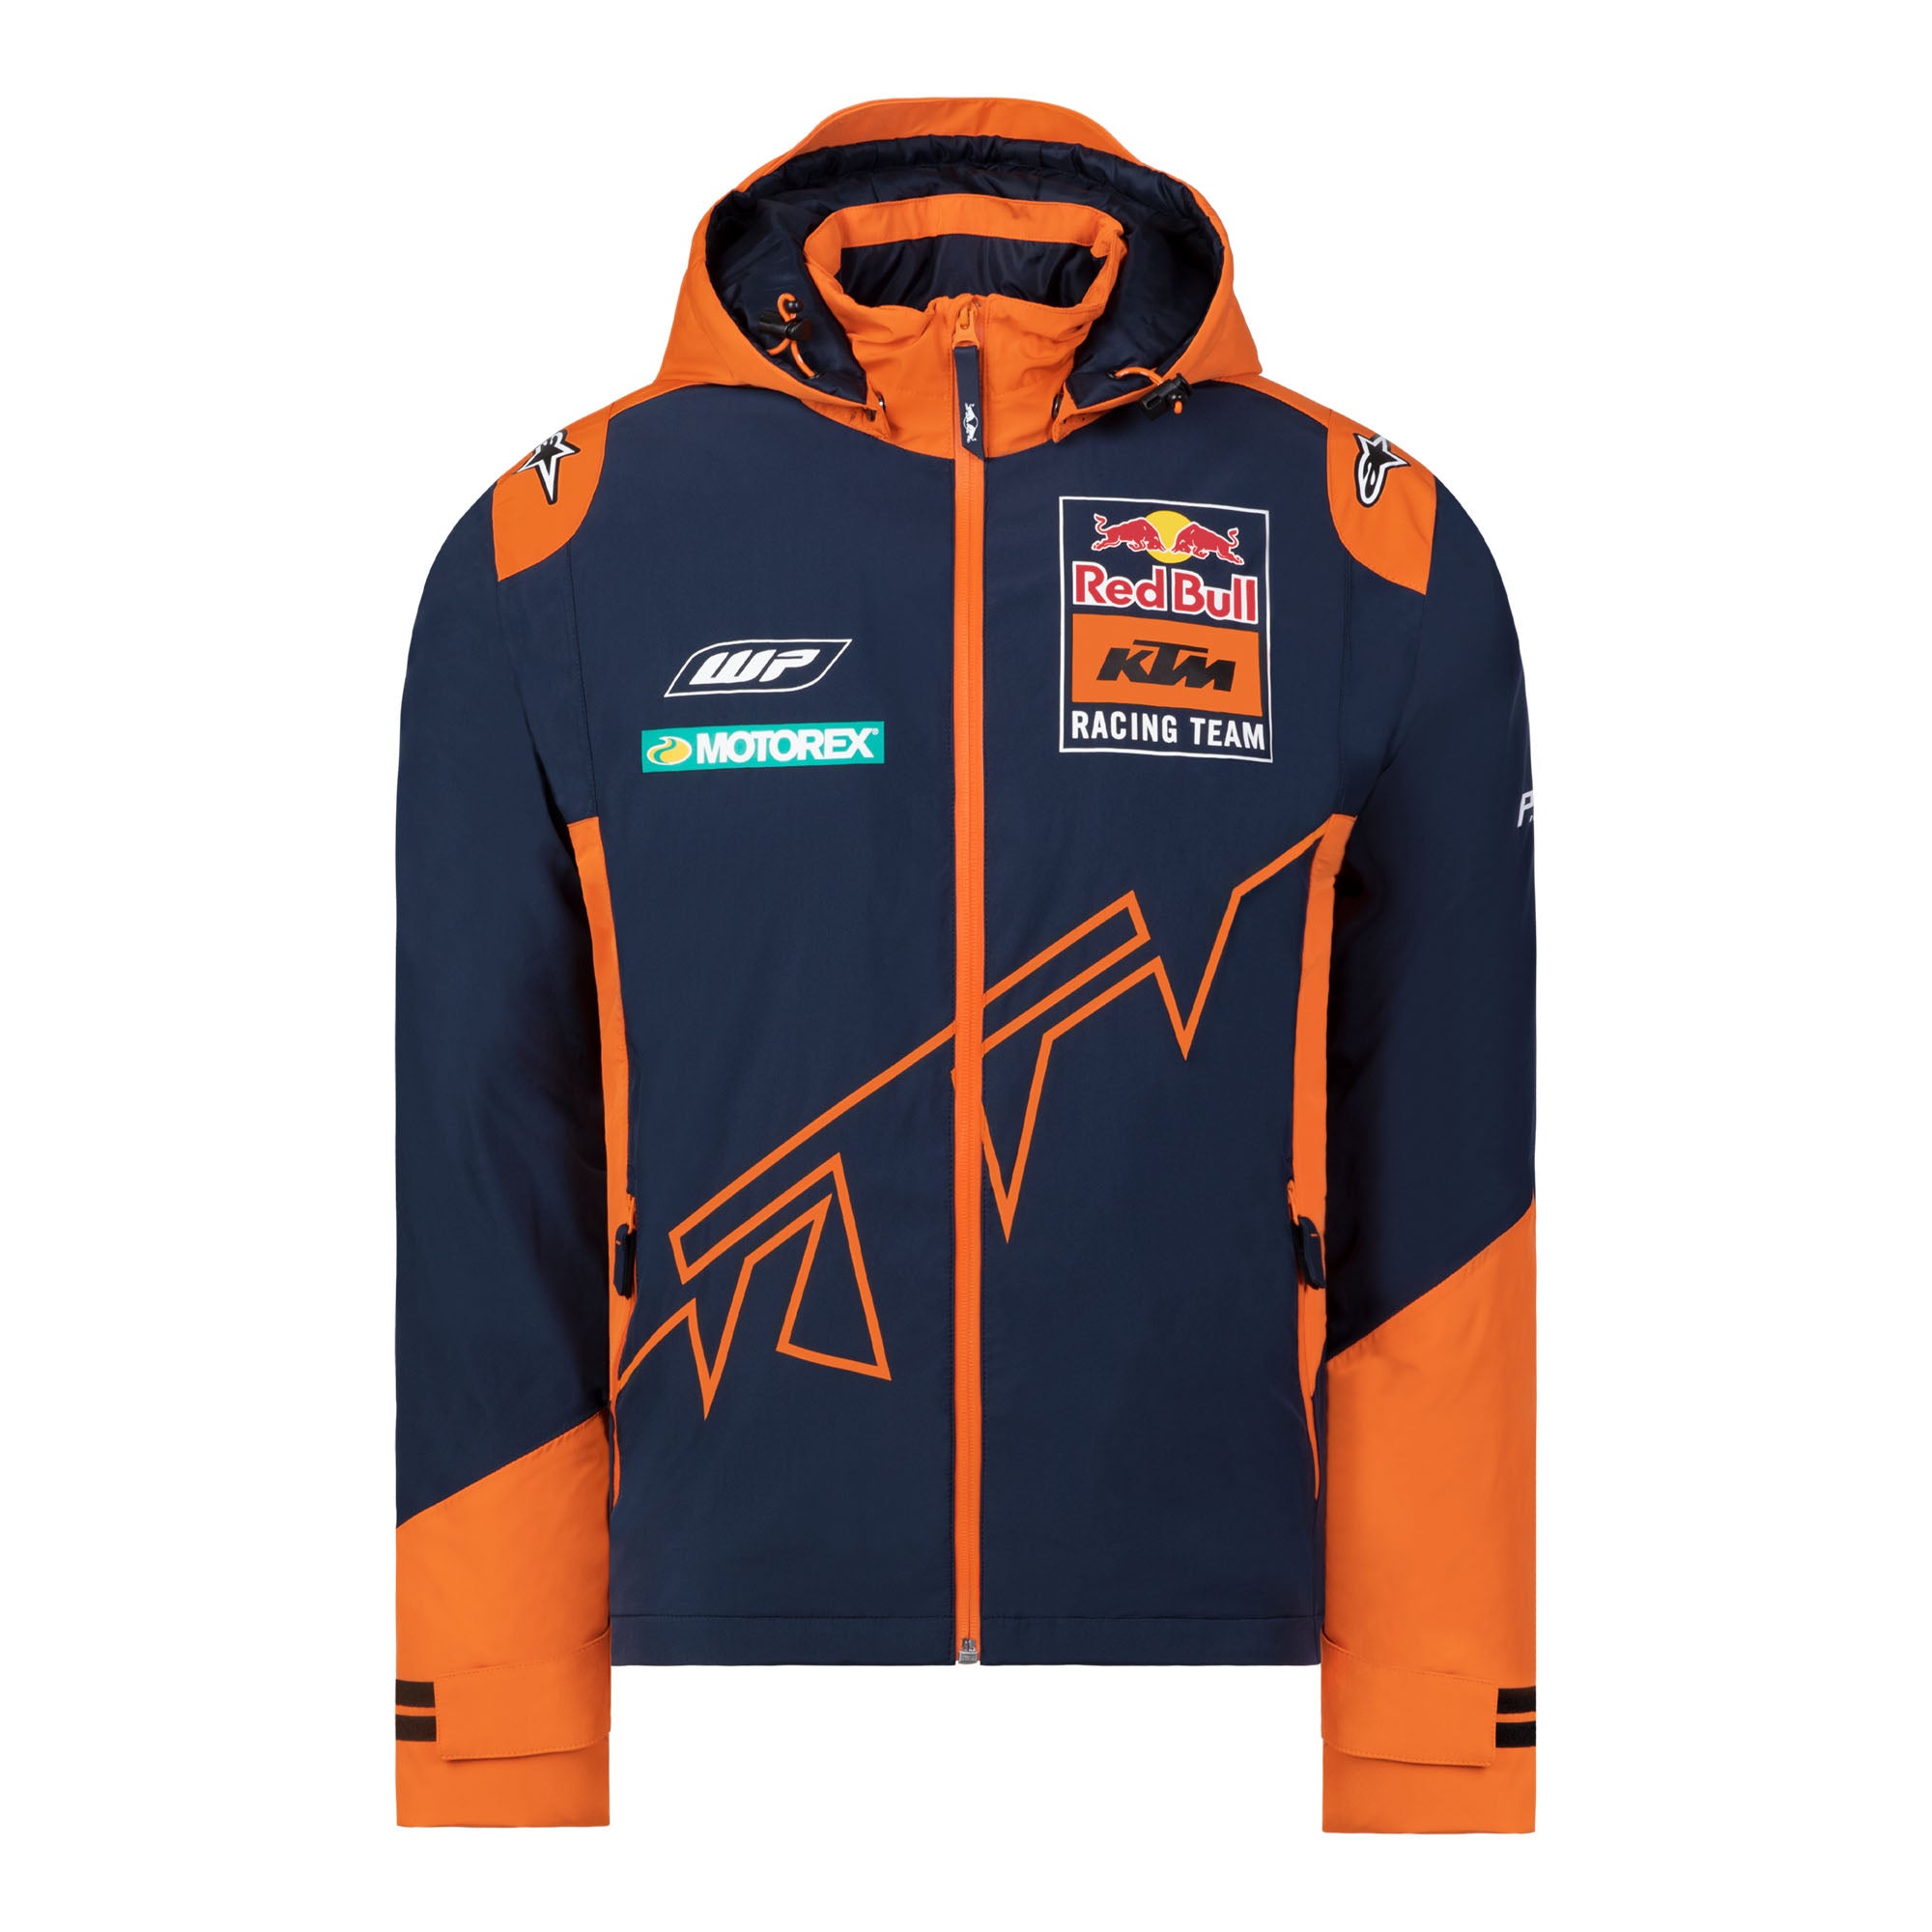 Bull KTM Racing Team Official Teamline Winter Jacket